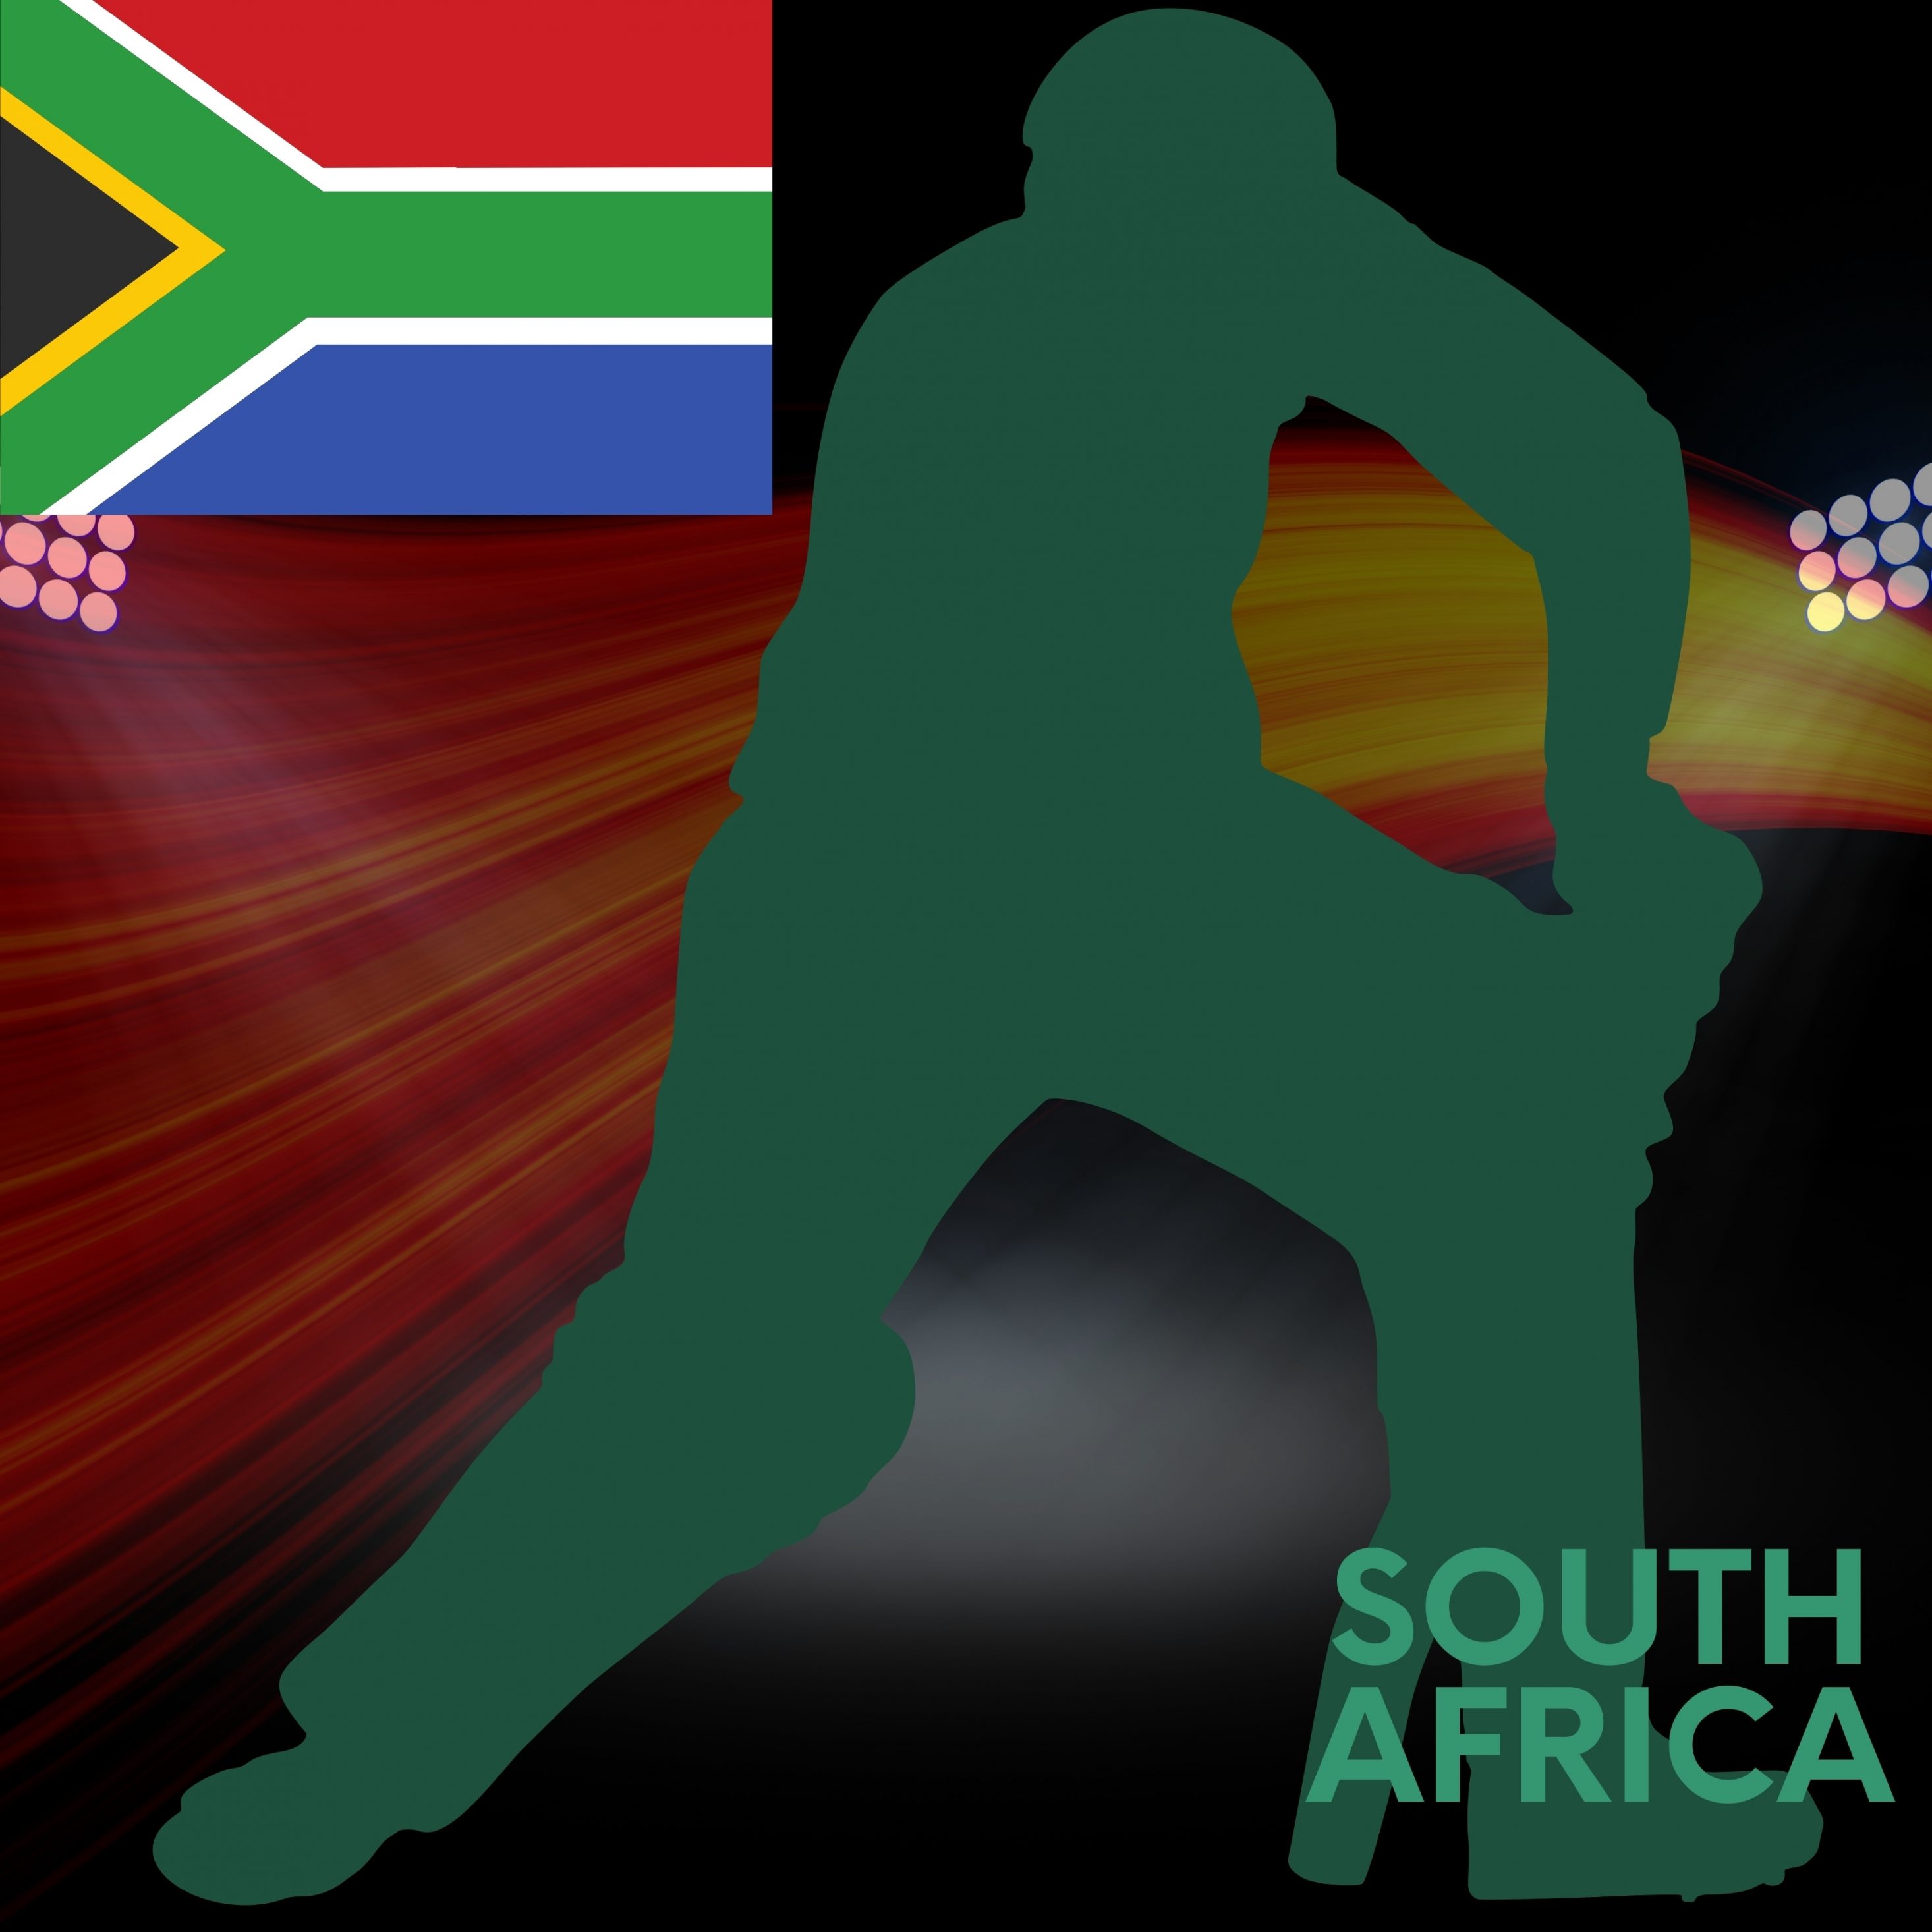 2932x2932 iPad Pro wallpaper 4k South Africa Cricket Stadium iPad Wallpaper 2932x2932 pixels resolution